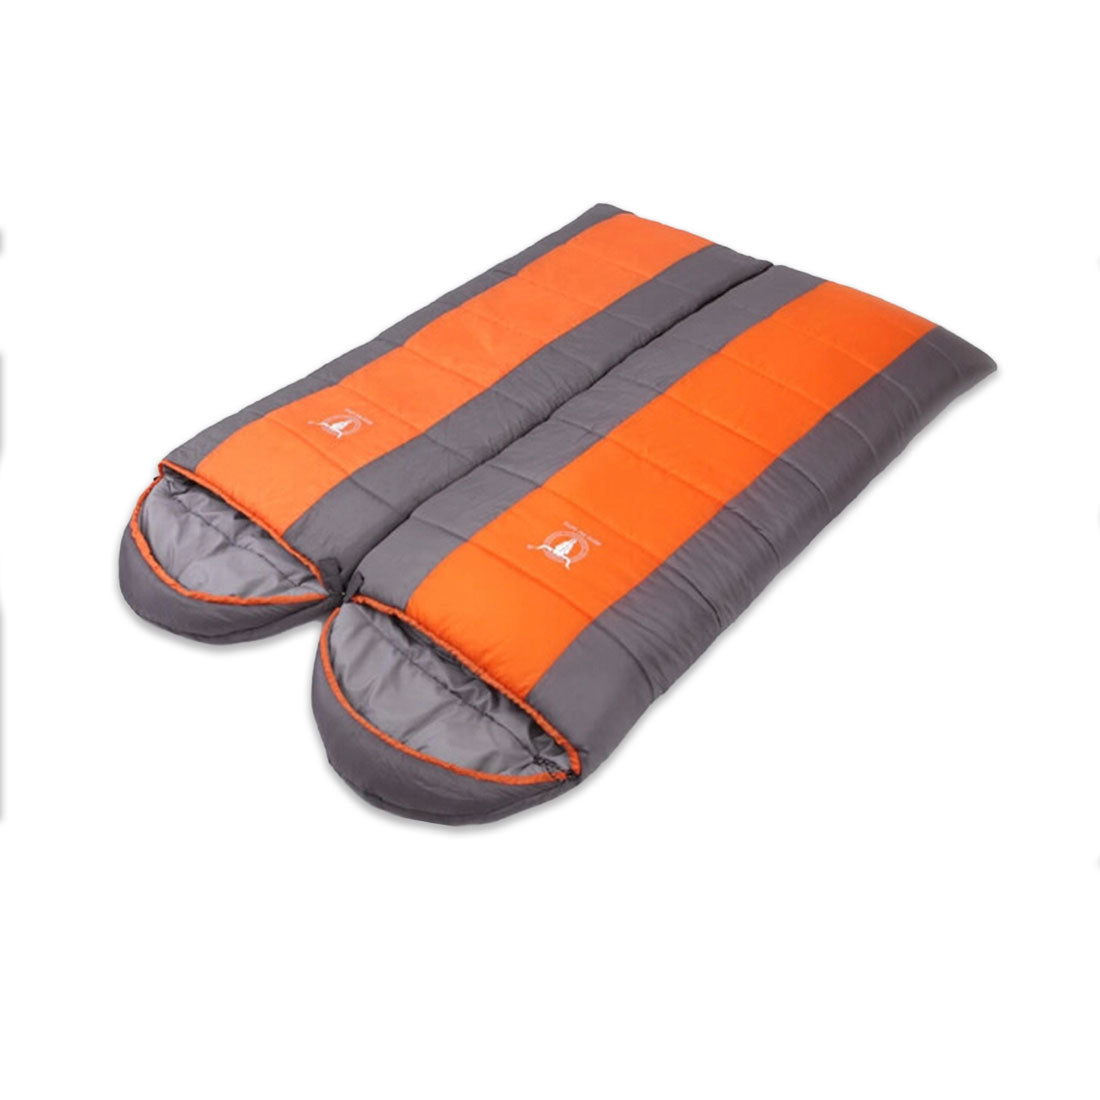 Double Camping Envelope Twin Sleeping Bag Thermal Tent Hiking Winter 0° C - orange